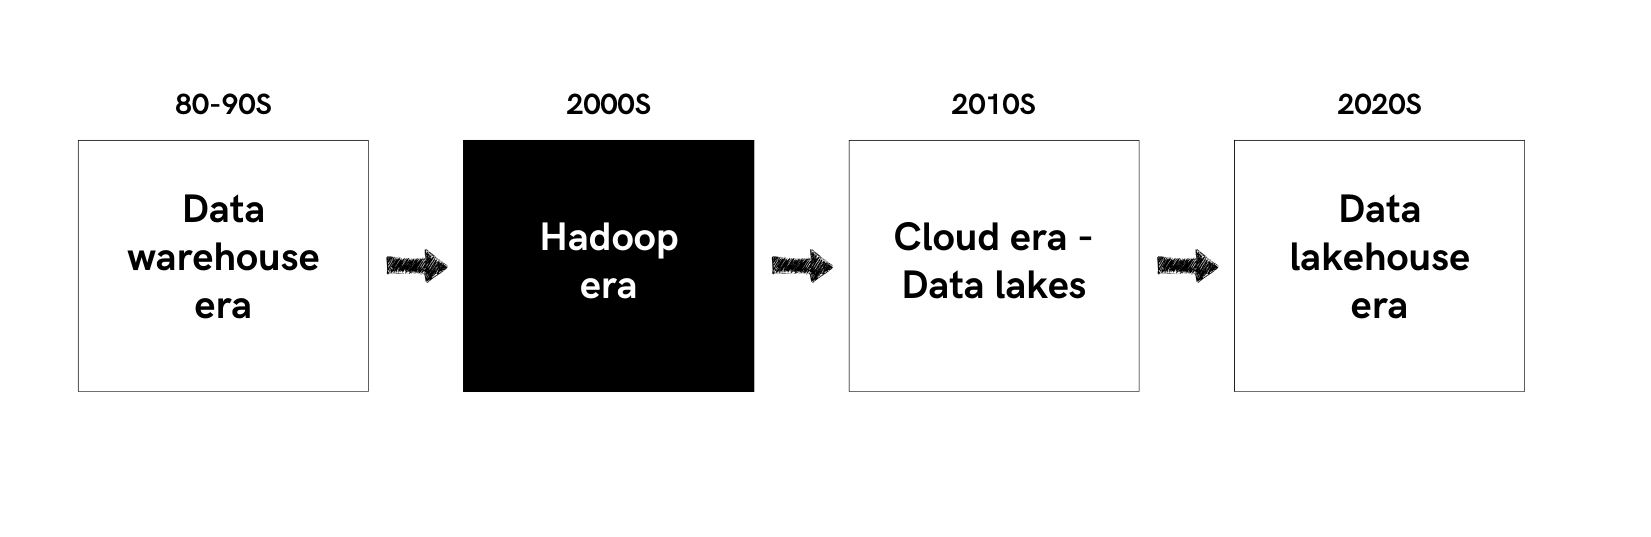 History of Data Lakehouse - Hadoop